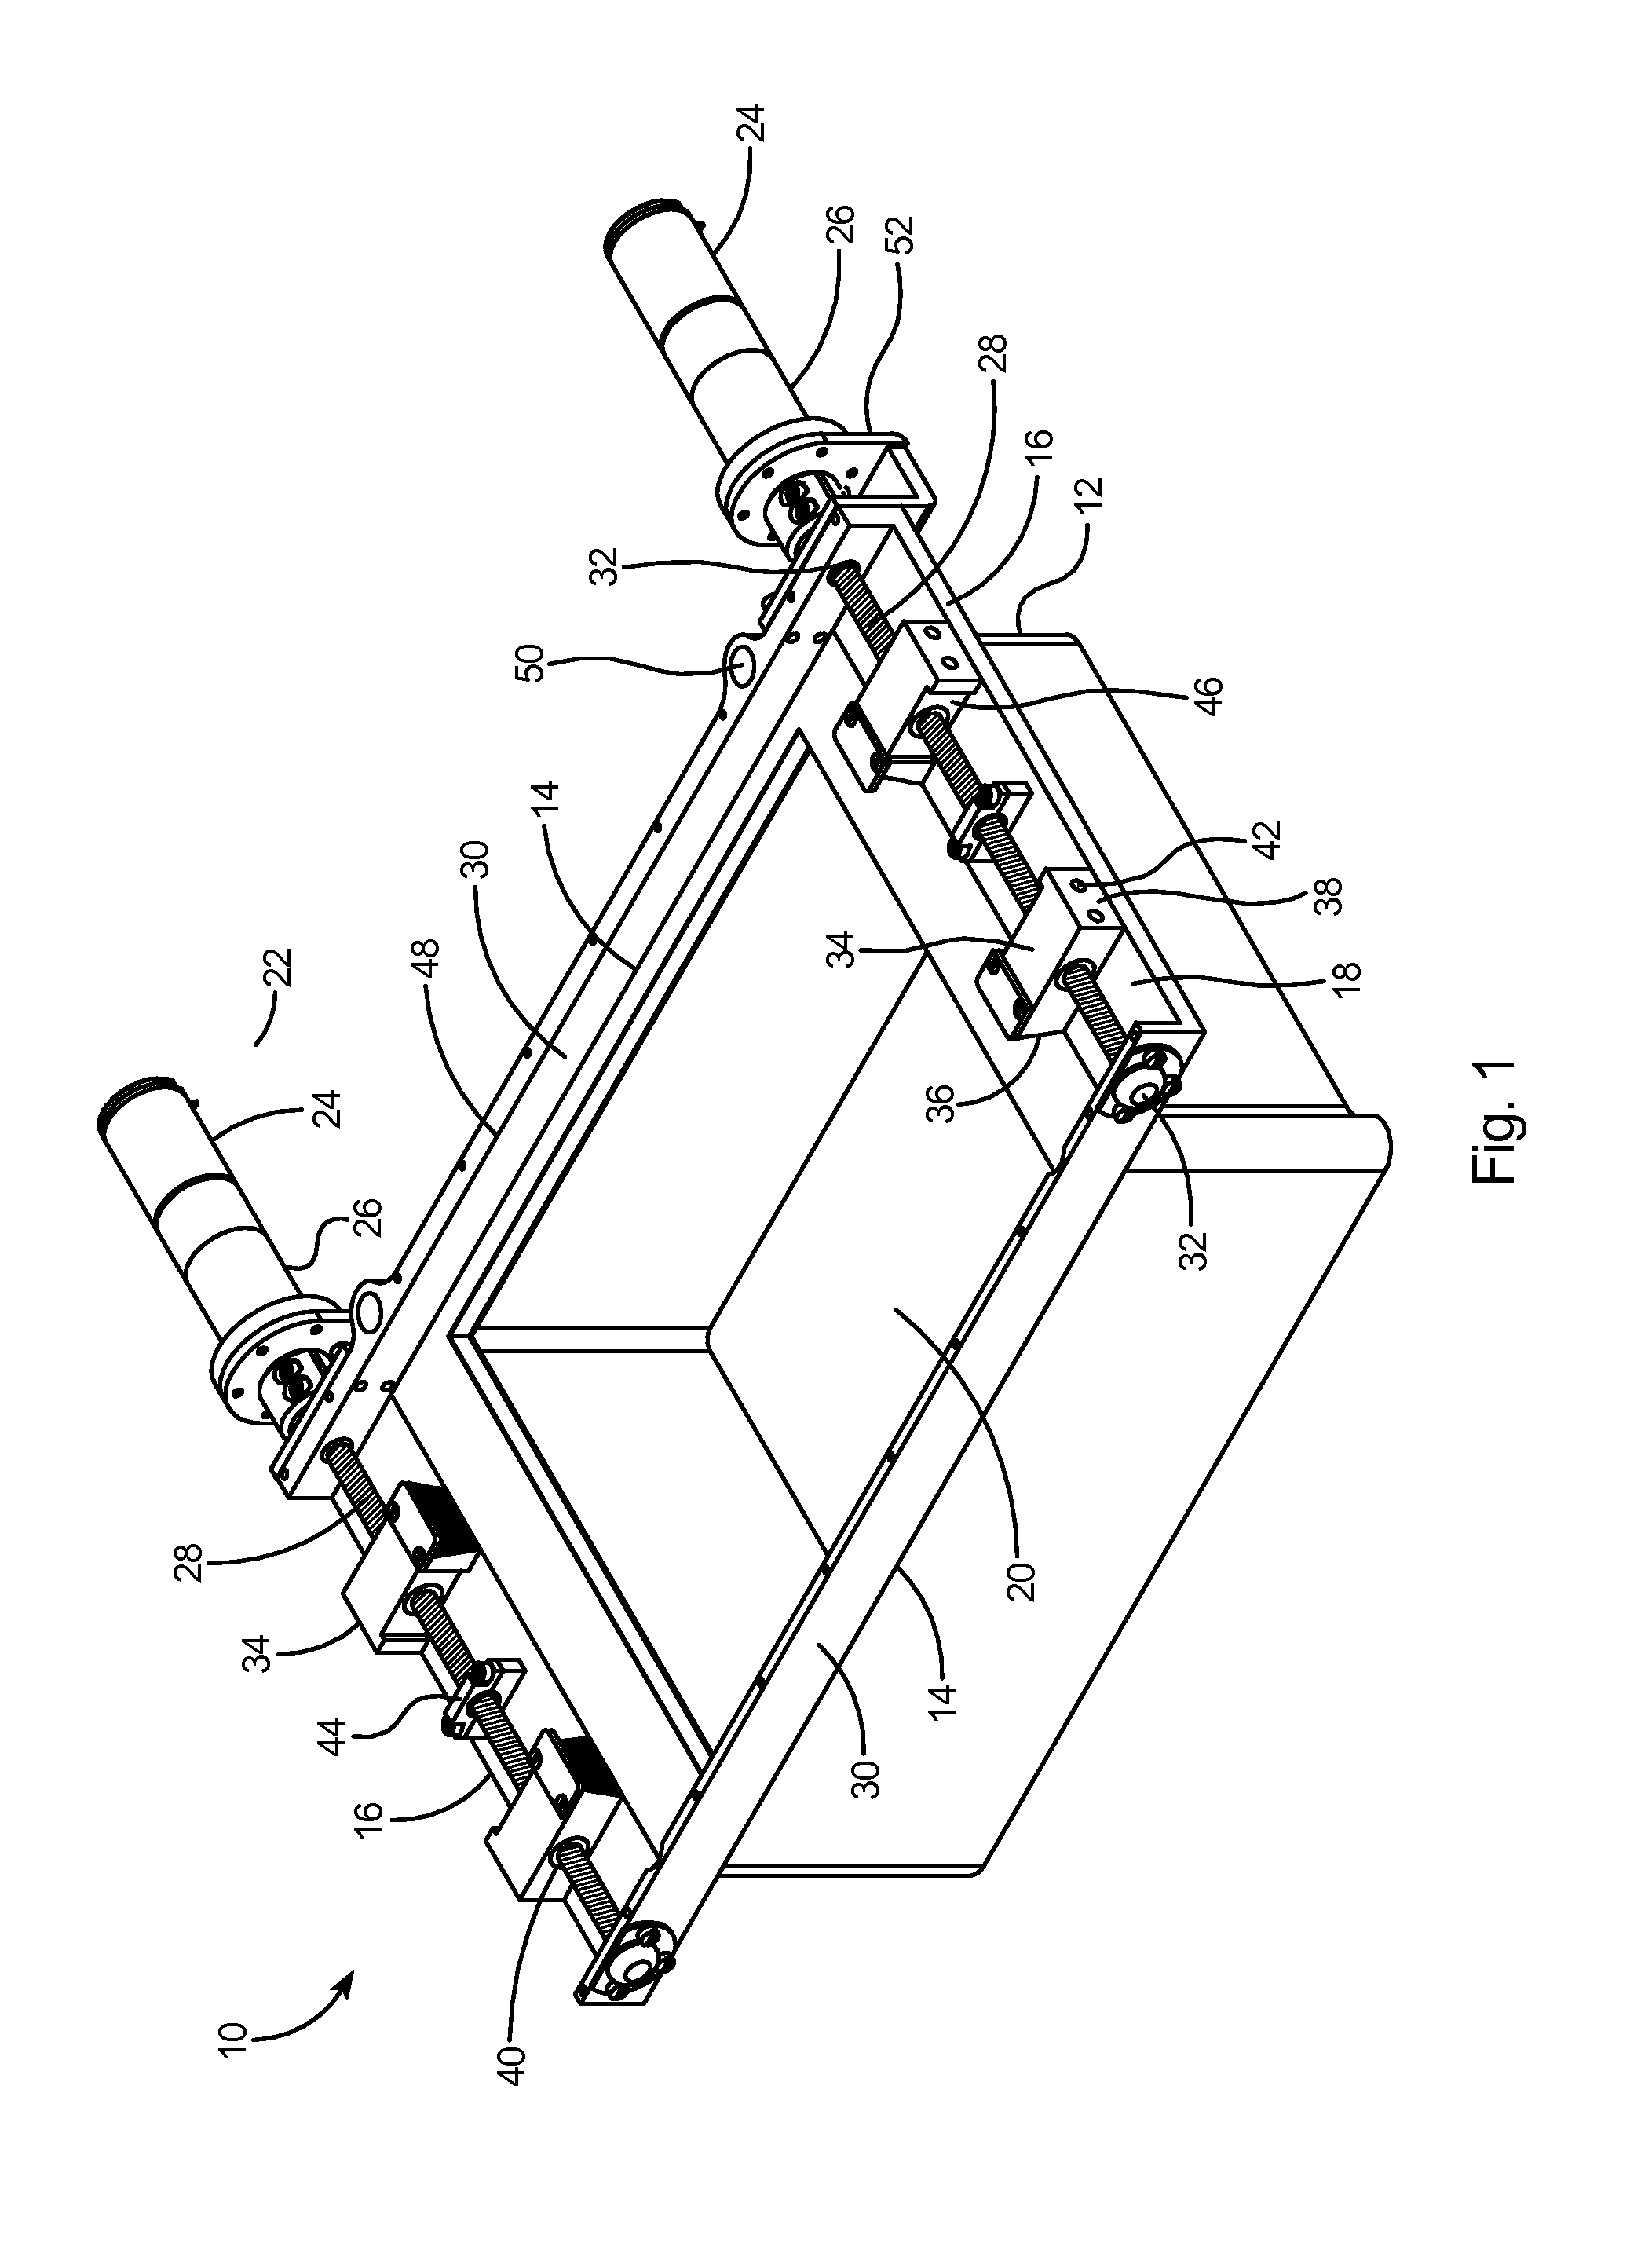 Apparatus and method for variable angle slant hole collimator